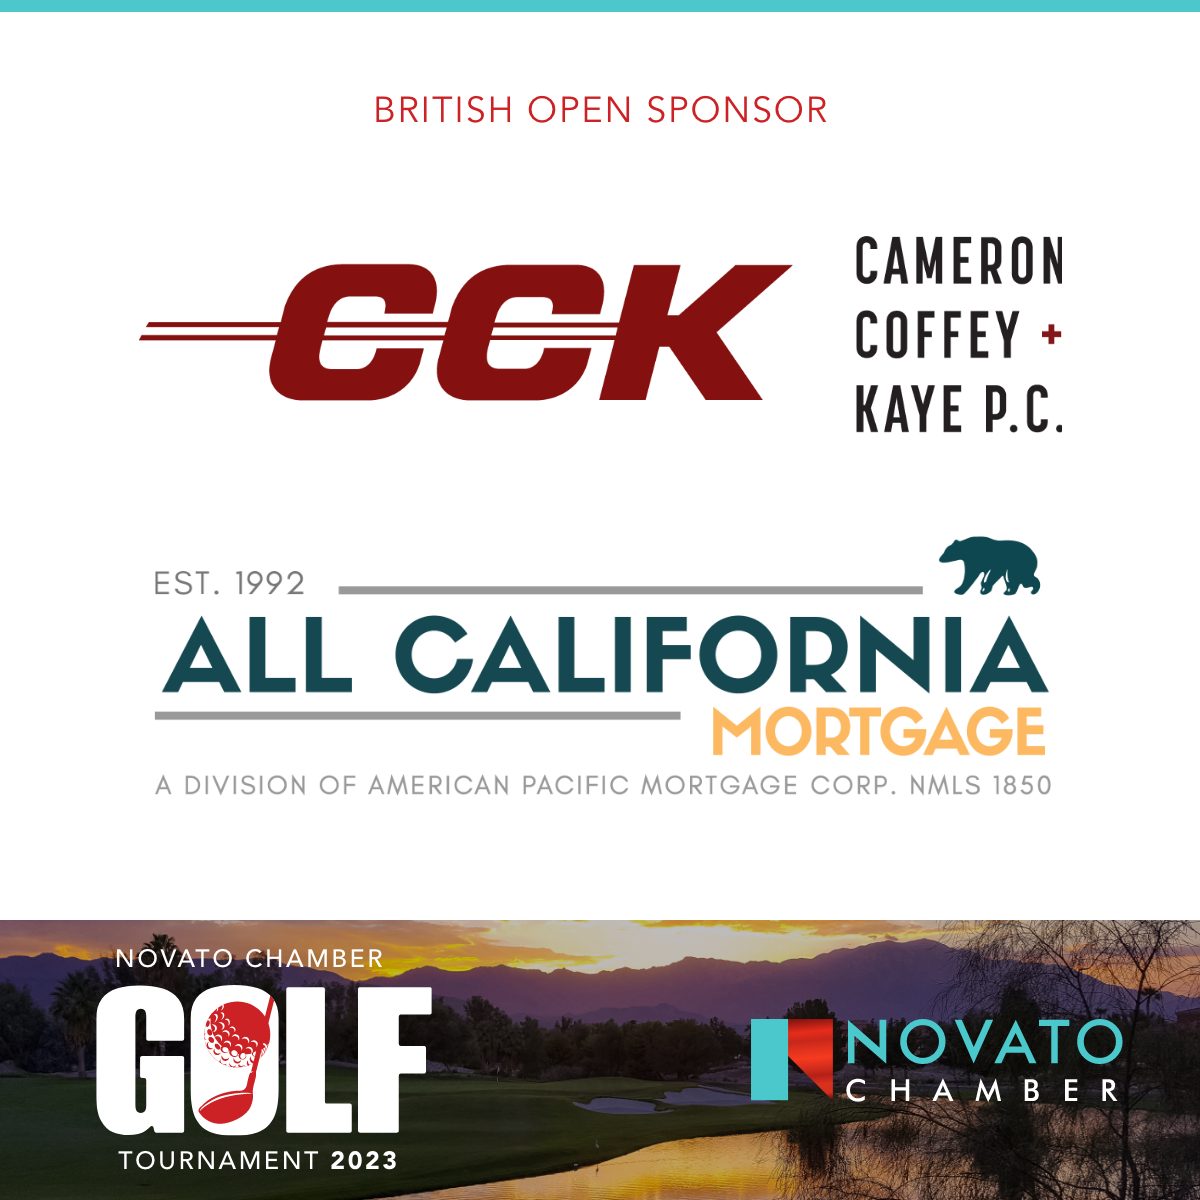 Golf2023-British Open Sponsor-Updated